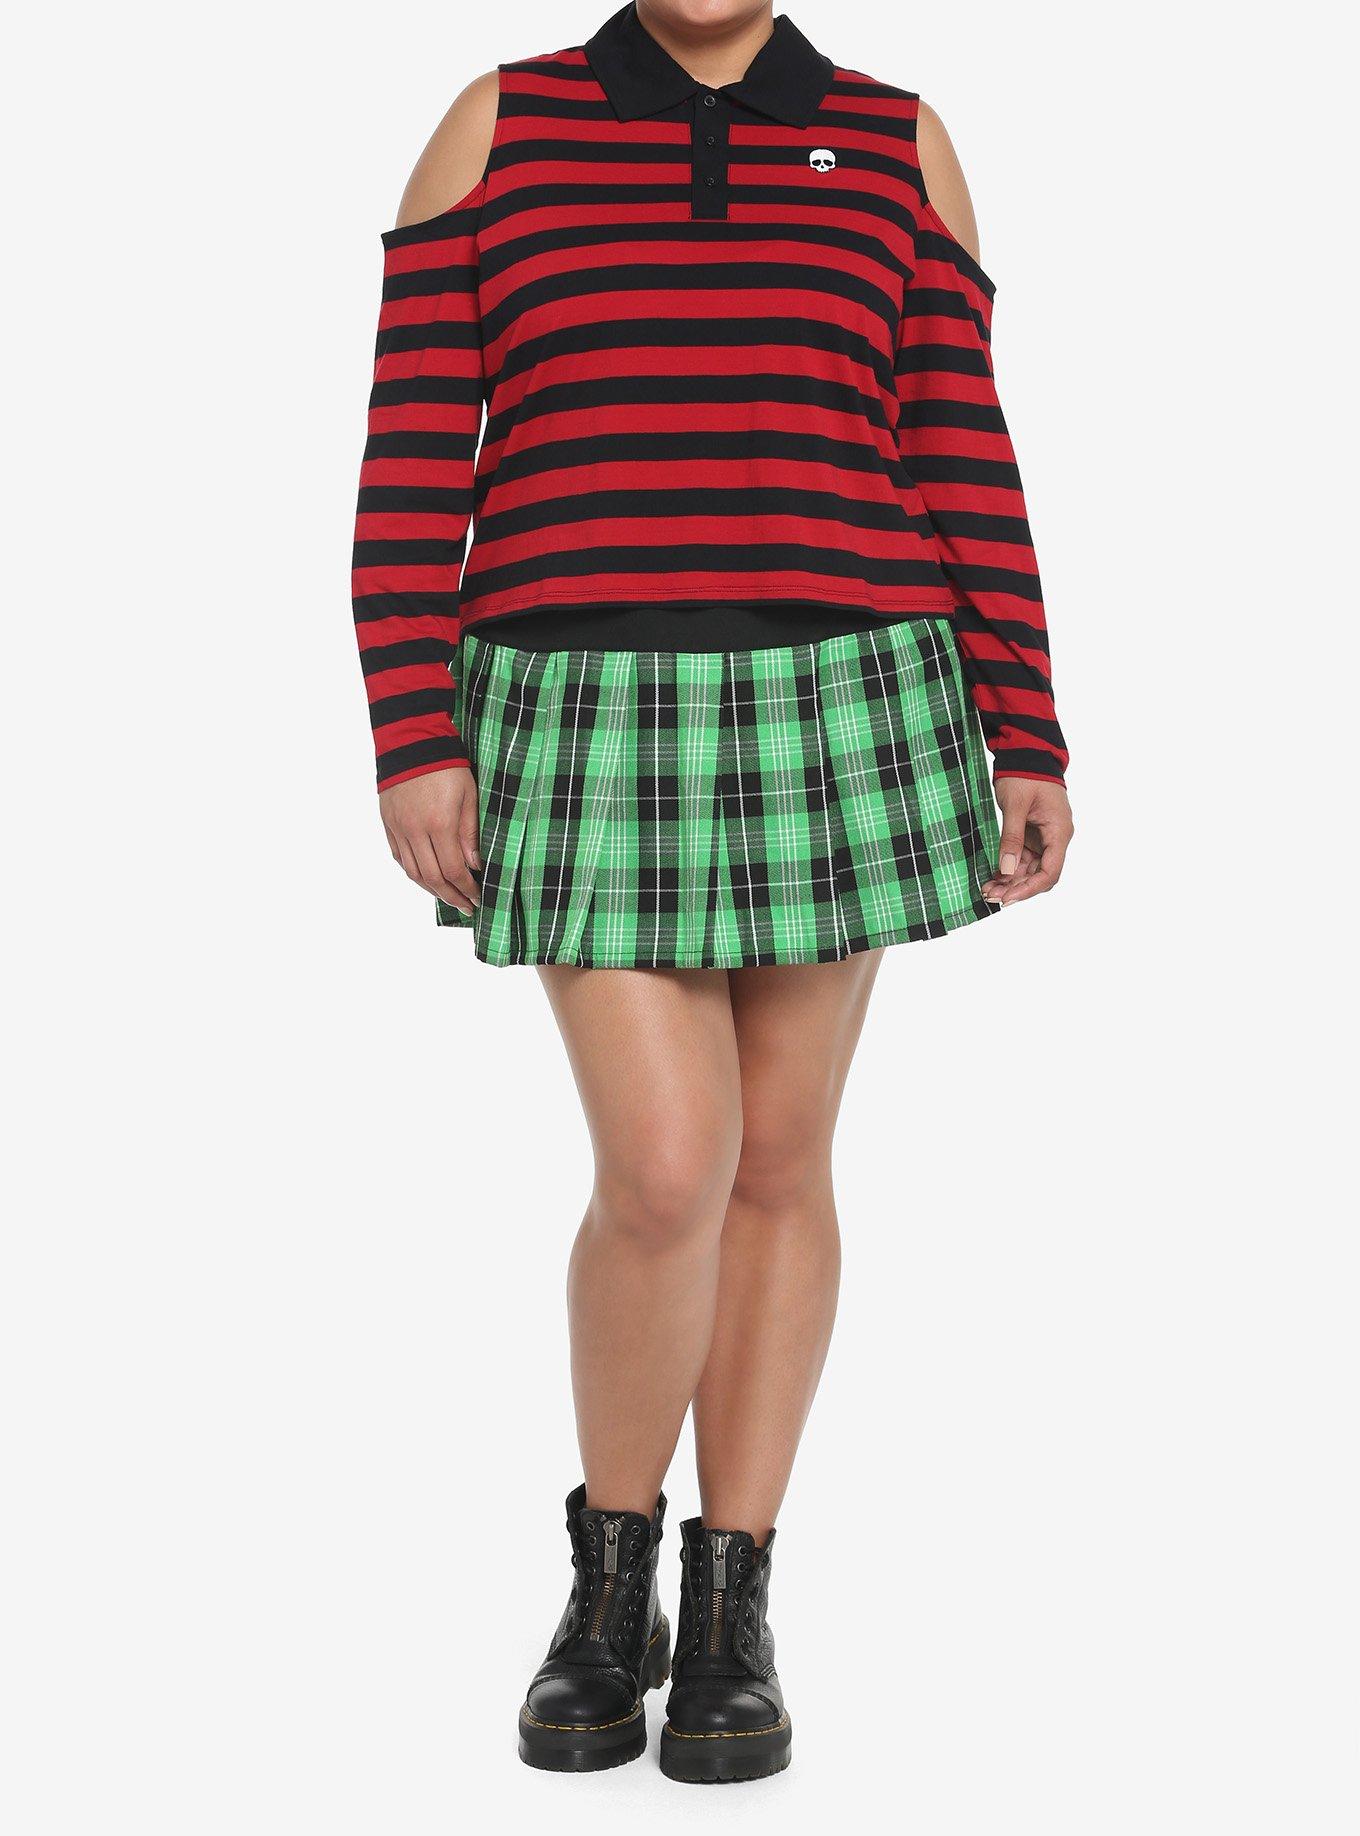 Black & Red Stripe Cold Shoulder Girls Long-Sleeve Polo Shirt Plus Size, STRIPES - RED, alternate